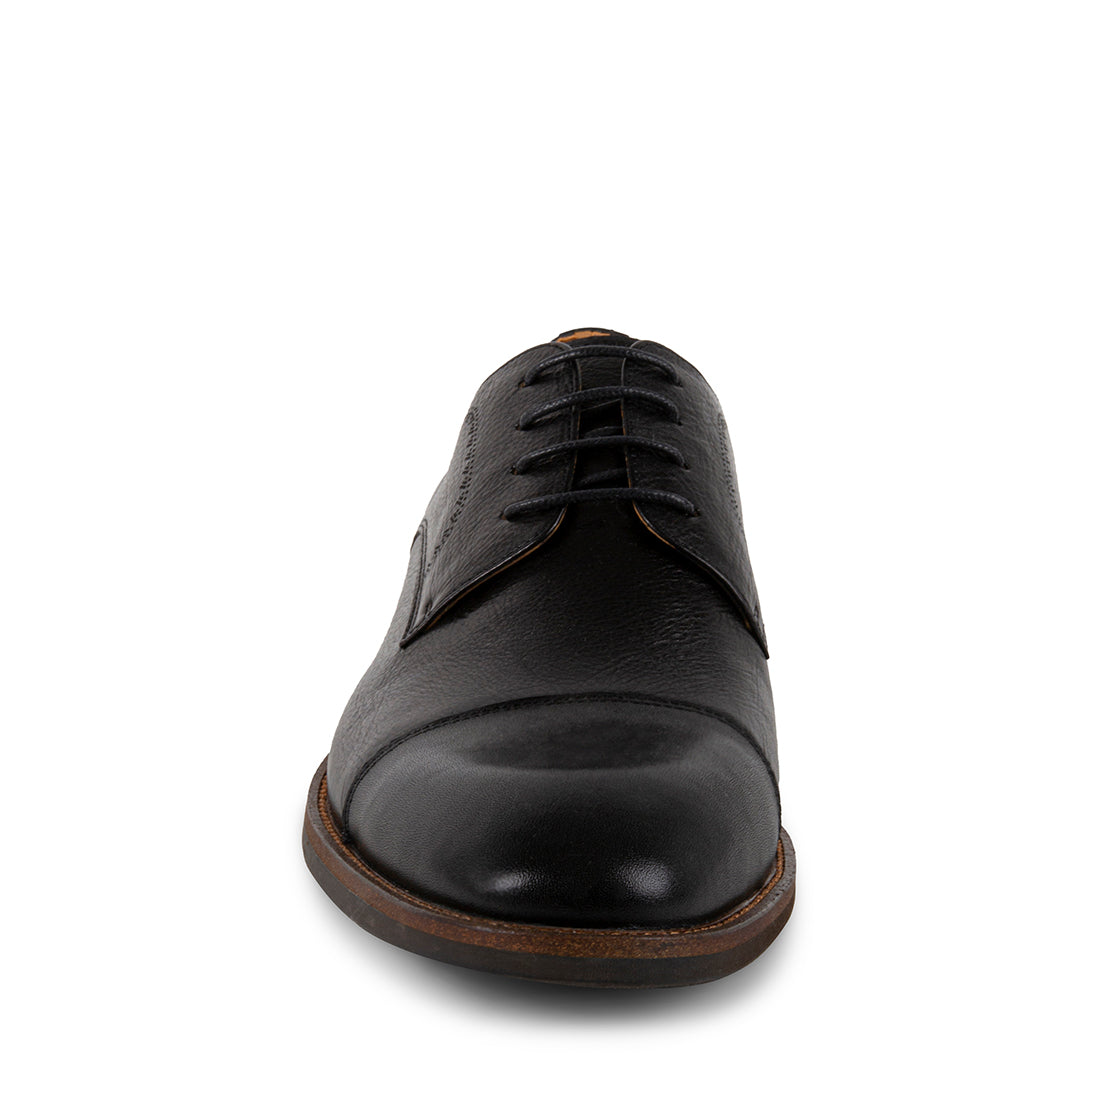 NELIGAN Black Leather Men's Dress Shoes | Men's Designer Dress Shoes ...